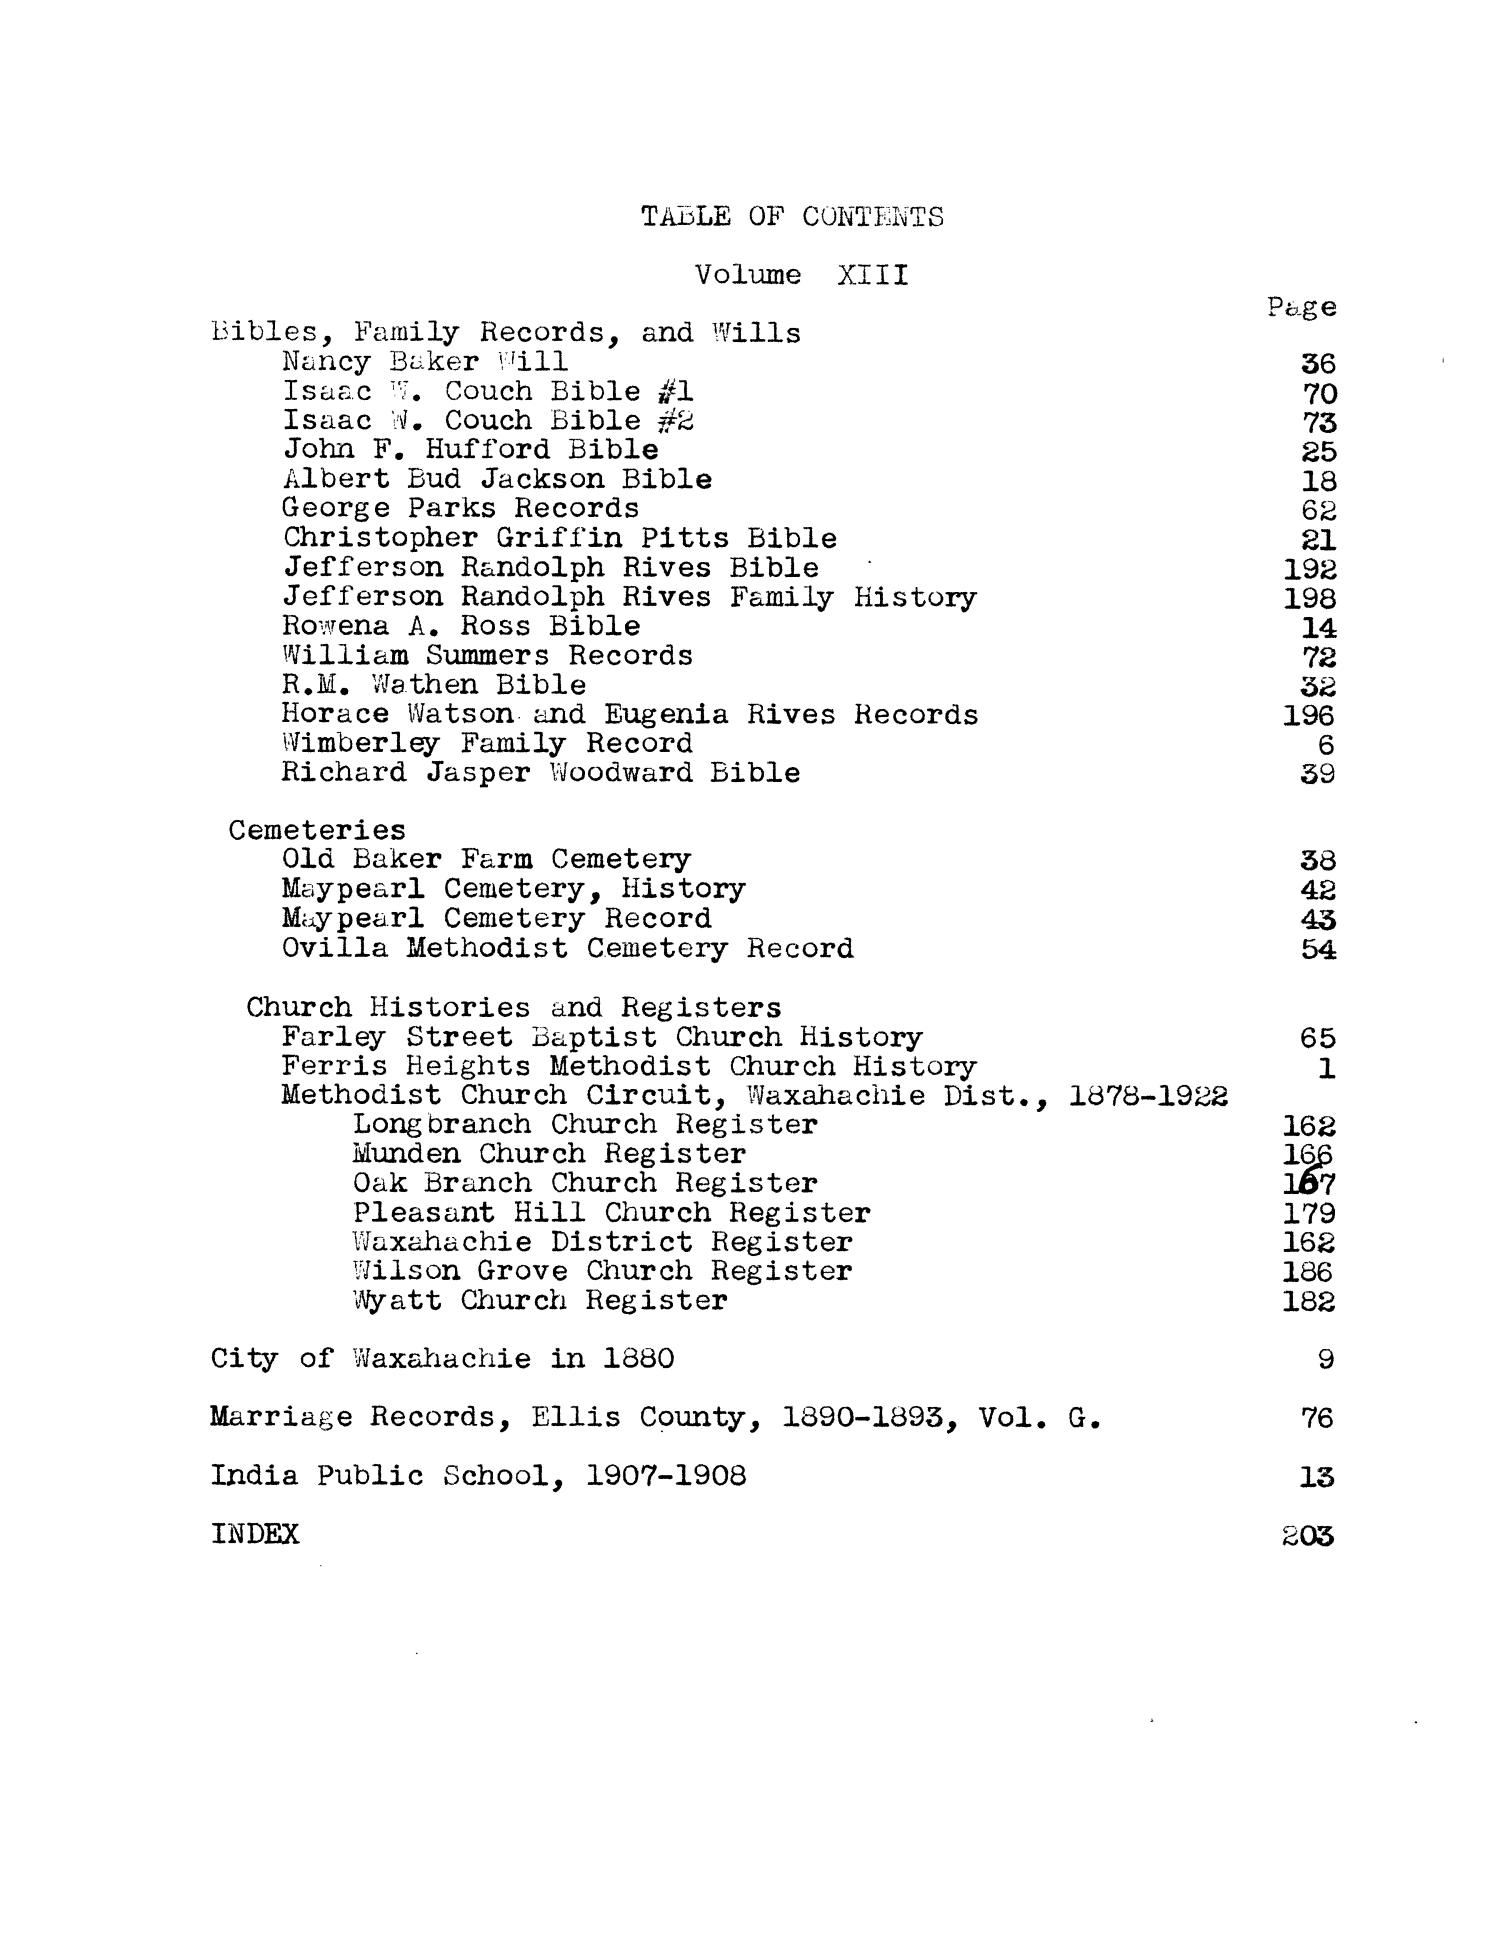 [Texas Genealogical Records, Ellis County: Index]
                                                
                                                    16
                                                